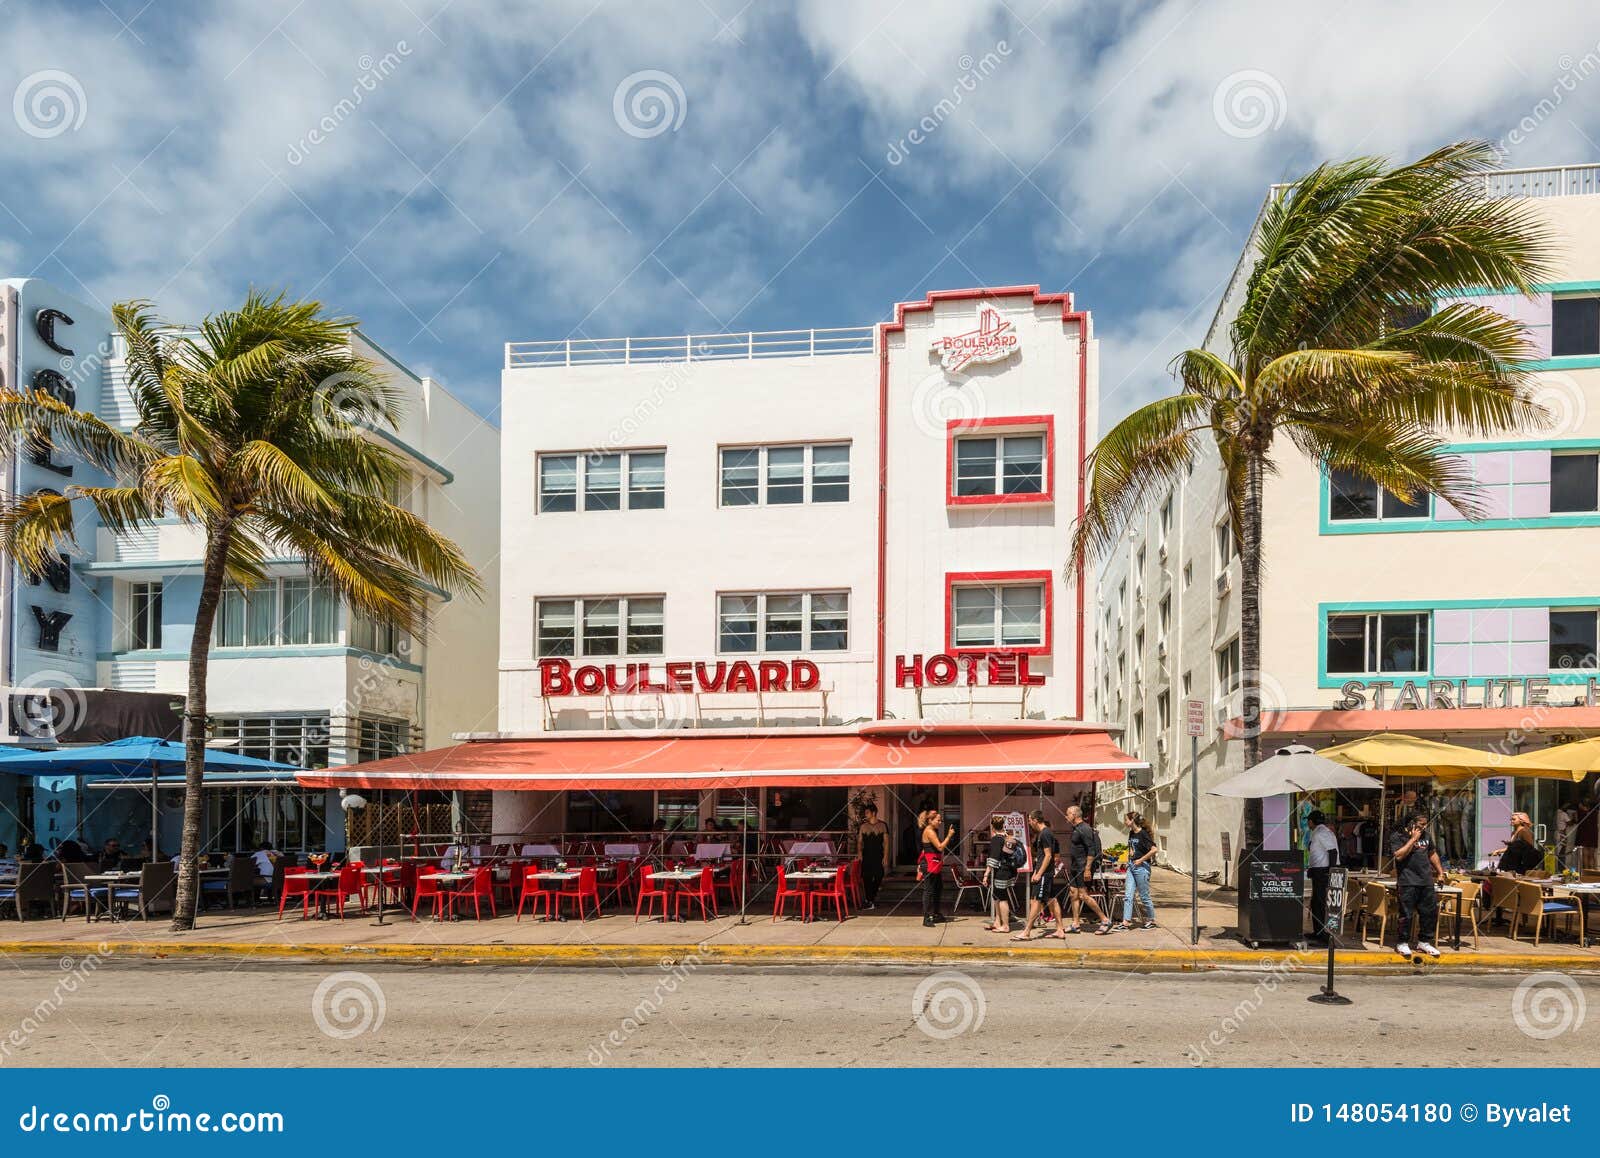 Art Deco Historic District In Miami Beach South Beach